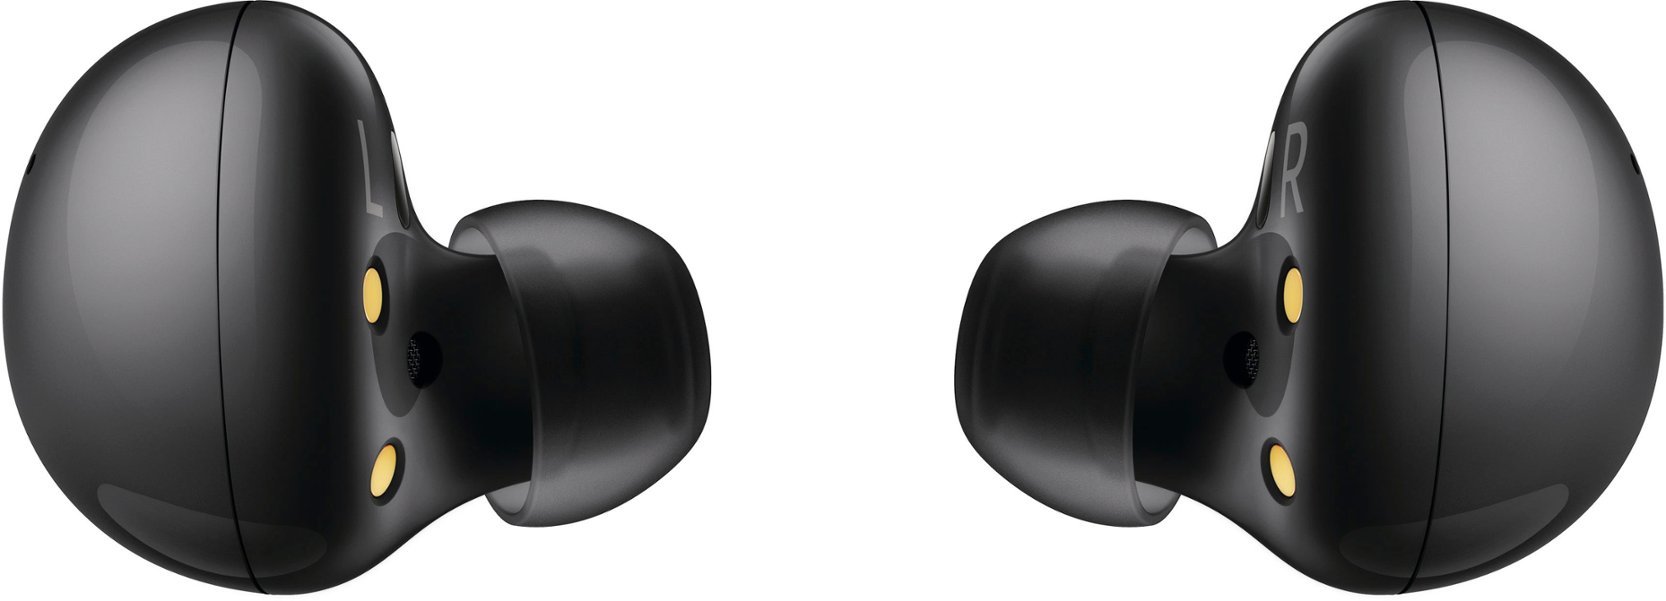 Samsung - Galaxy Buds2 True Wireless Earbud Headphones - Phantom Black-Phantom Black